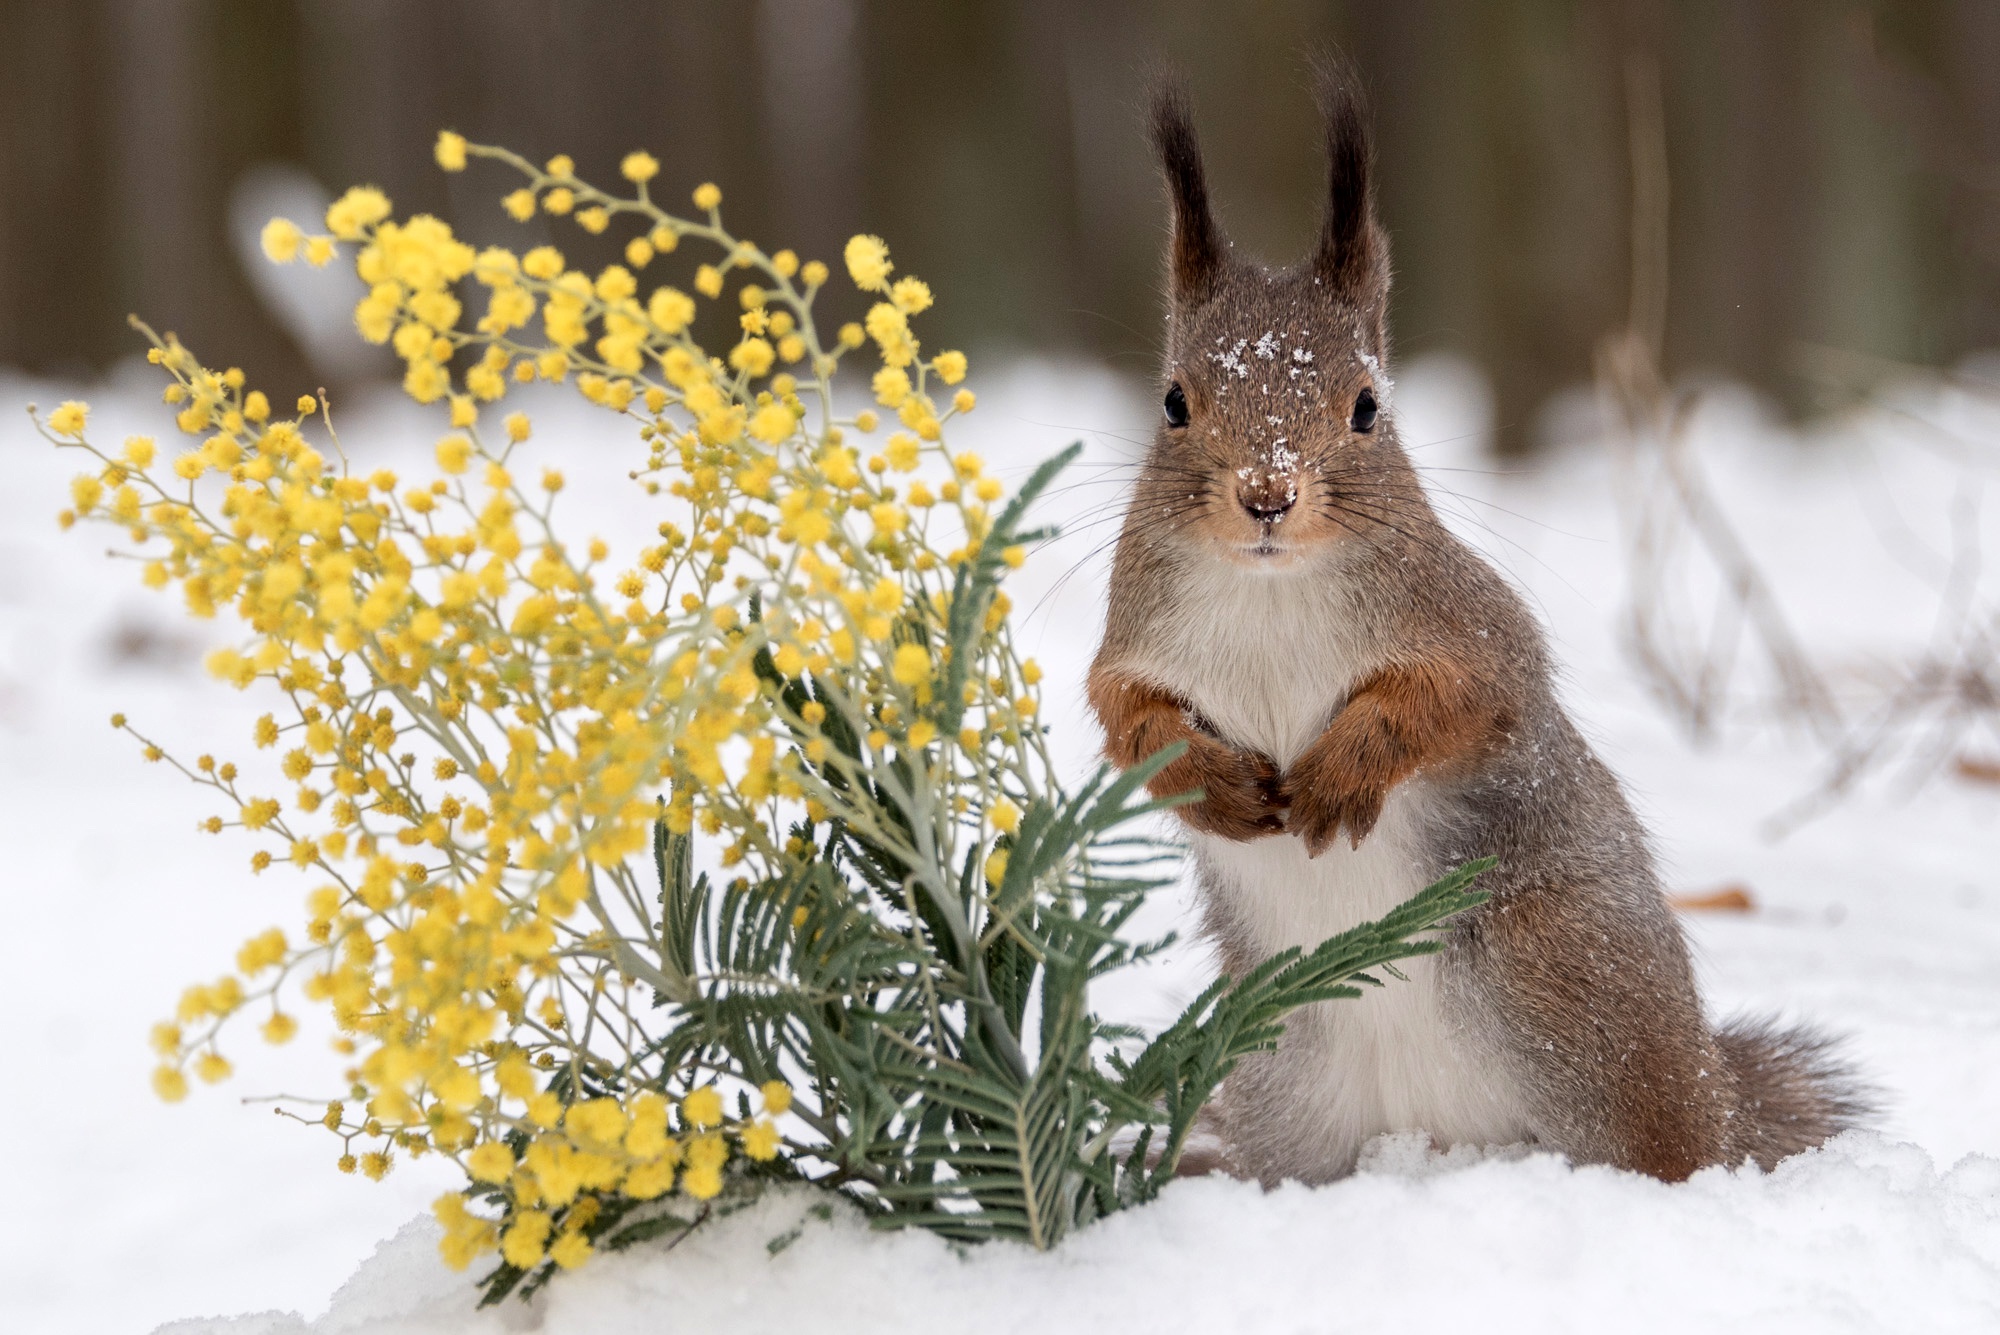 Скачать картинку Животные, Зима, Снег, Белка, Грызун, Желтый Цветок в телефон бесплатно.